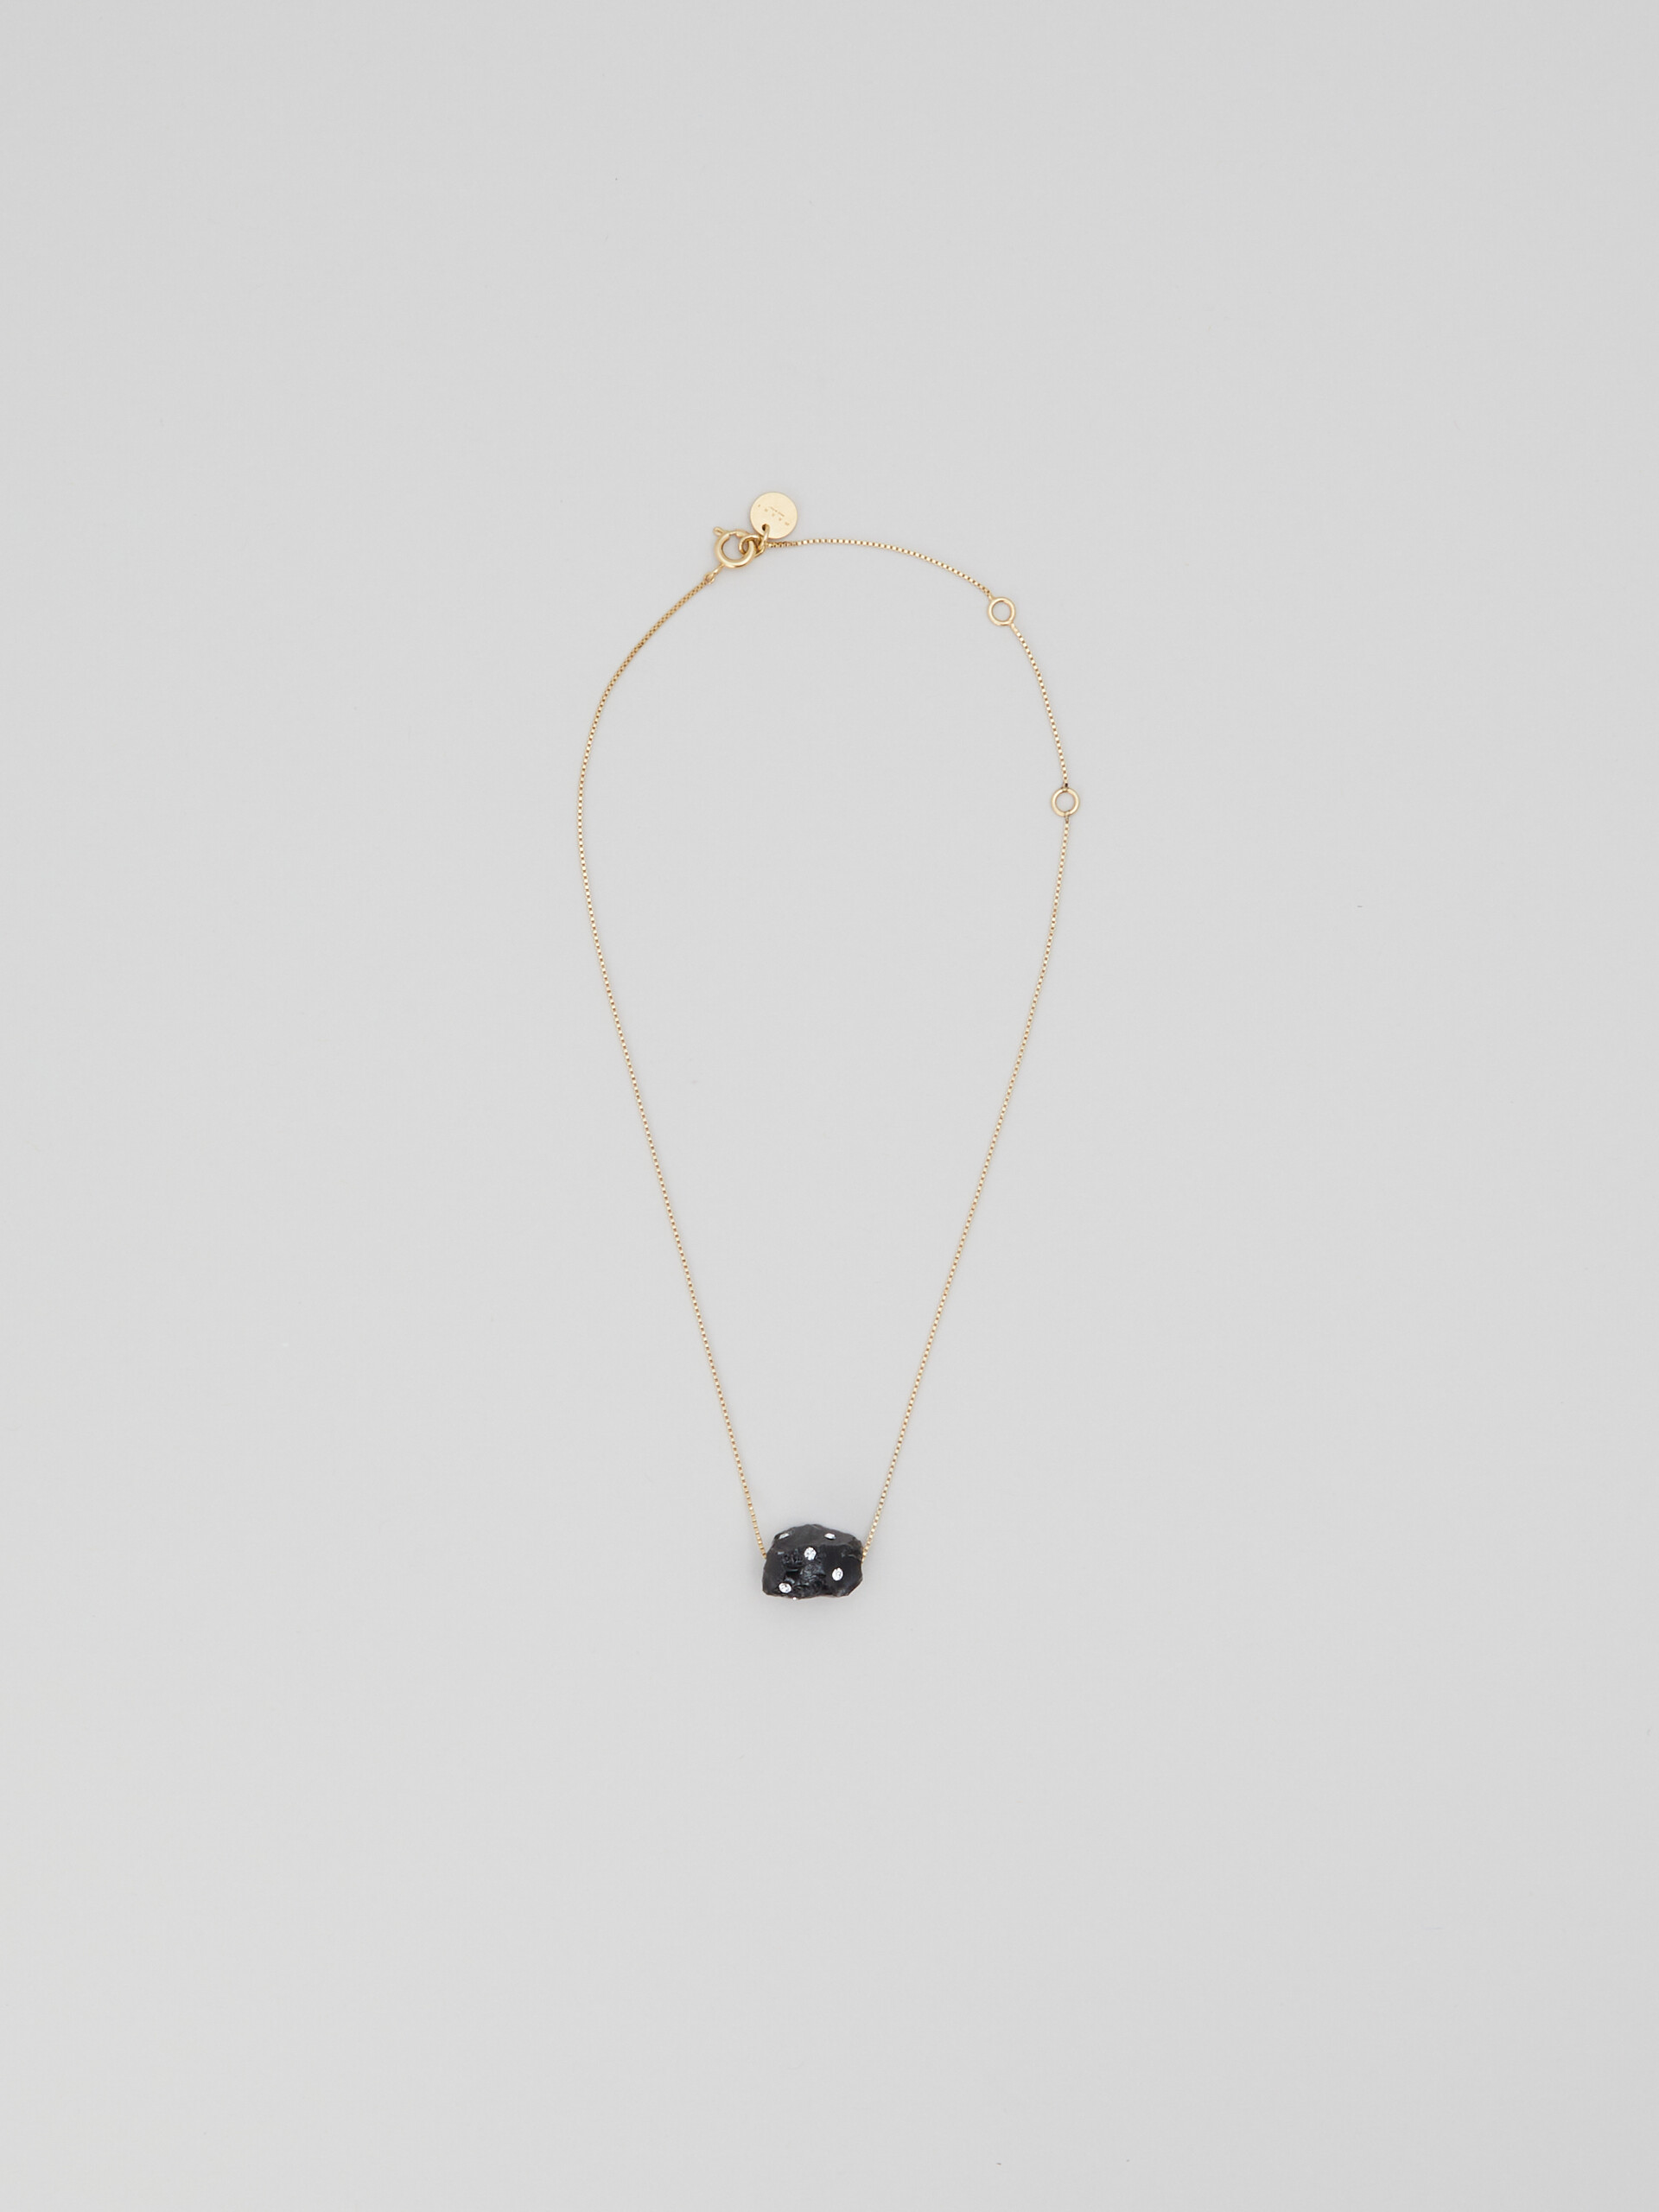 Black obsidian single-stone necklace with rhinestone polka dots - Necklaces - Image 1